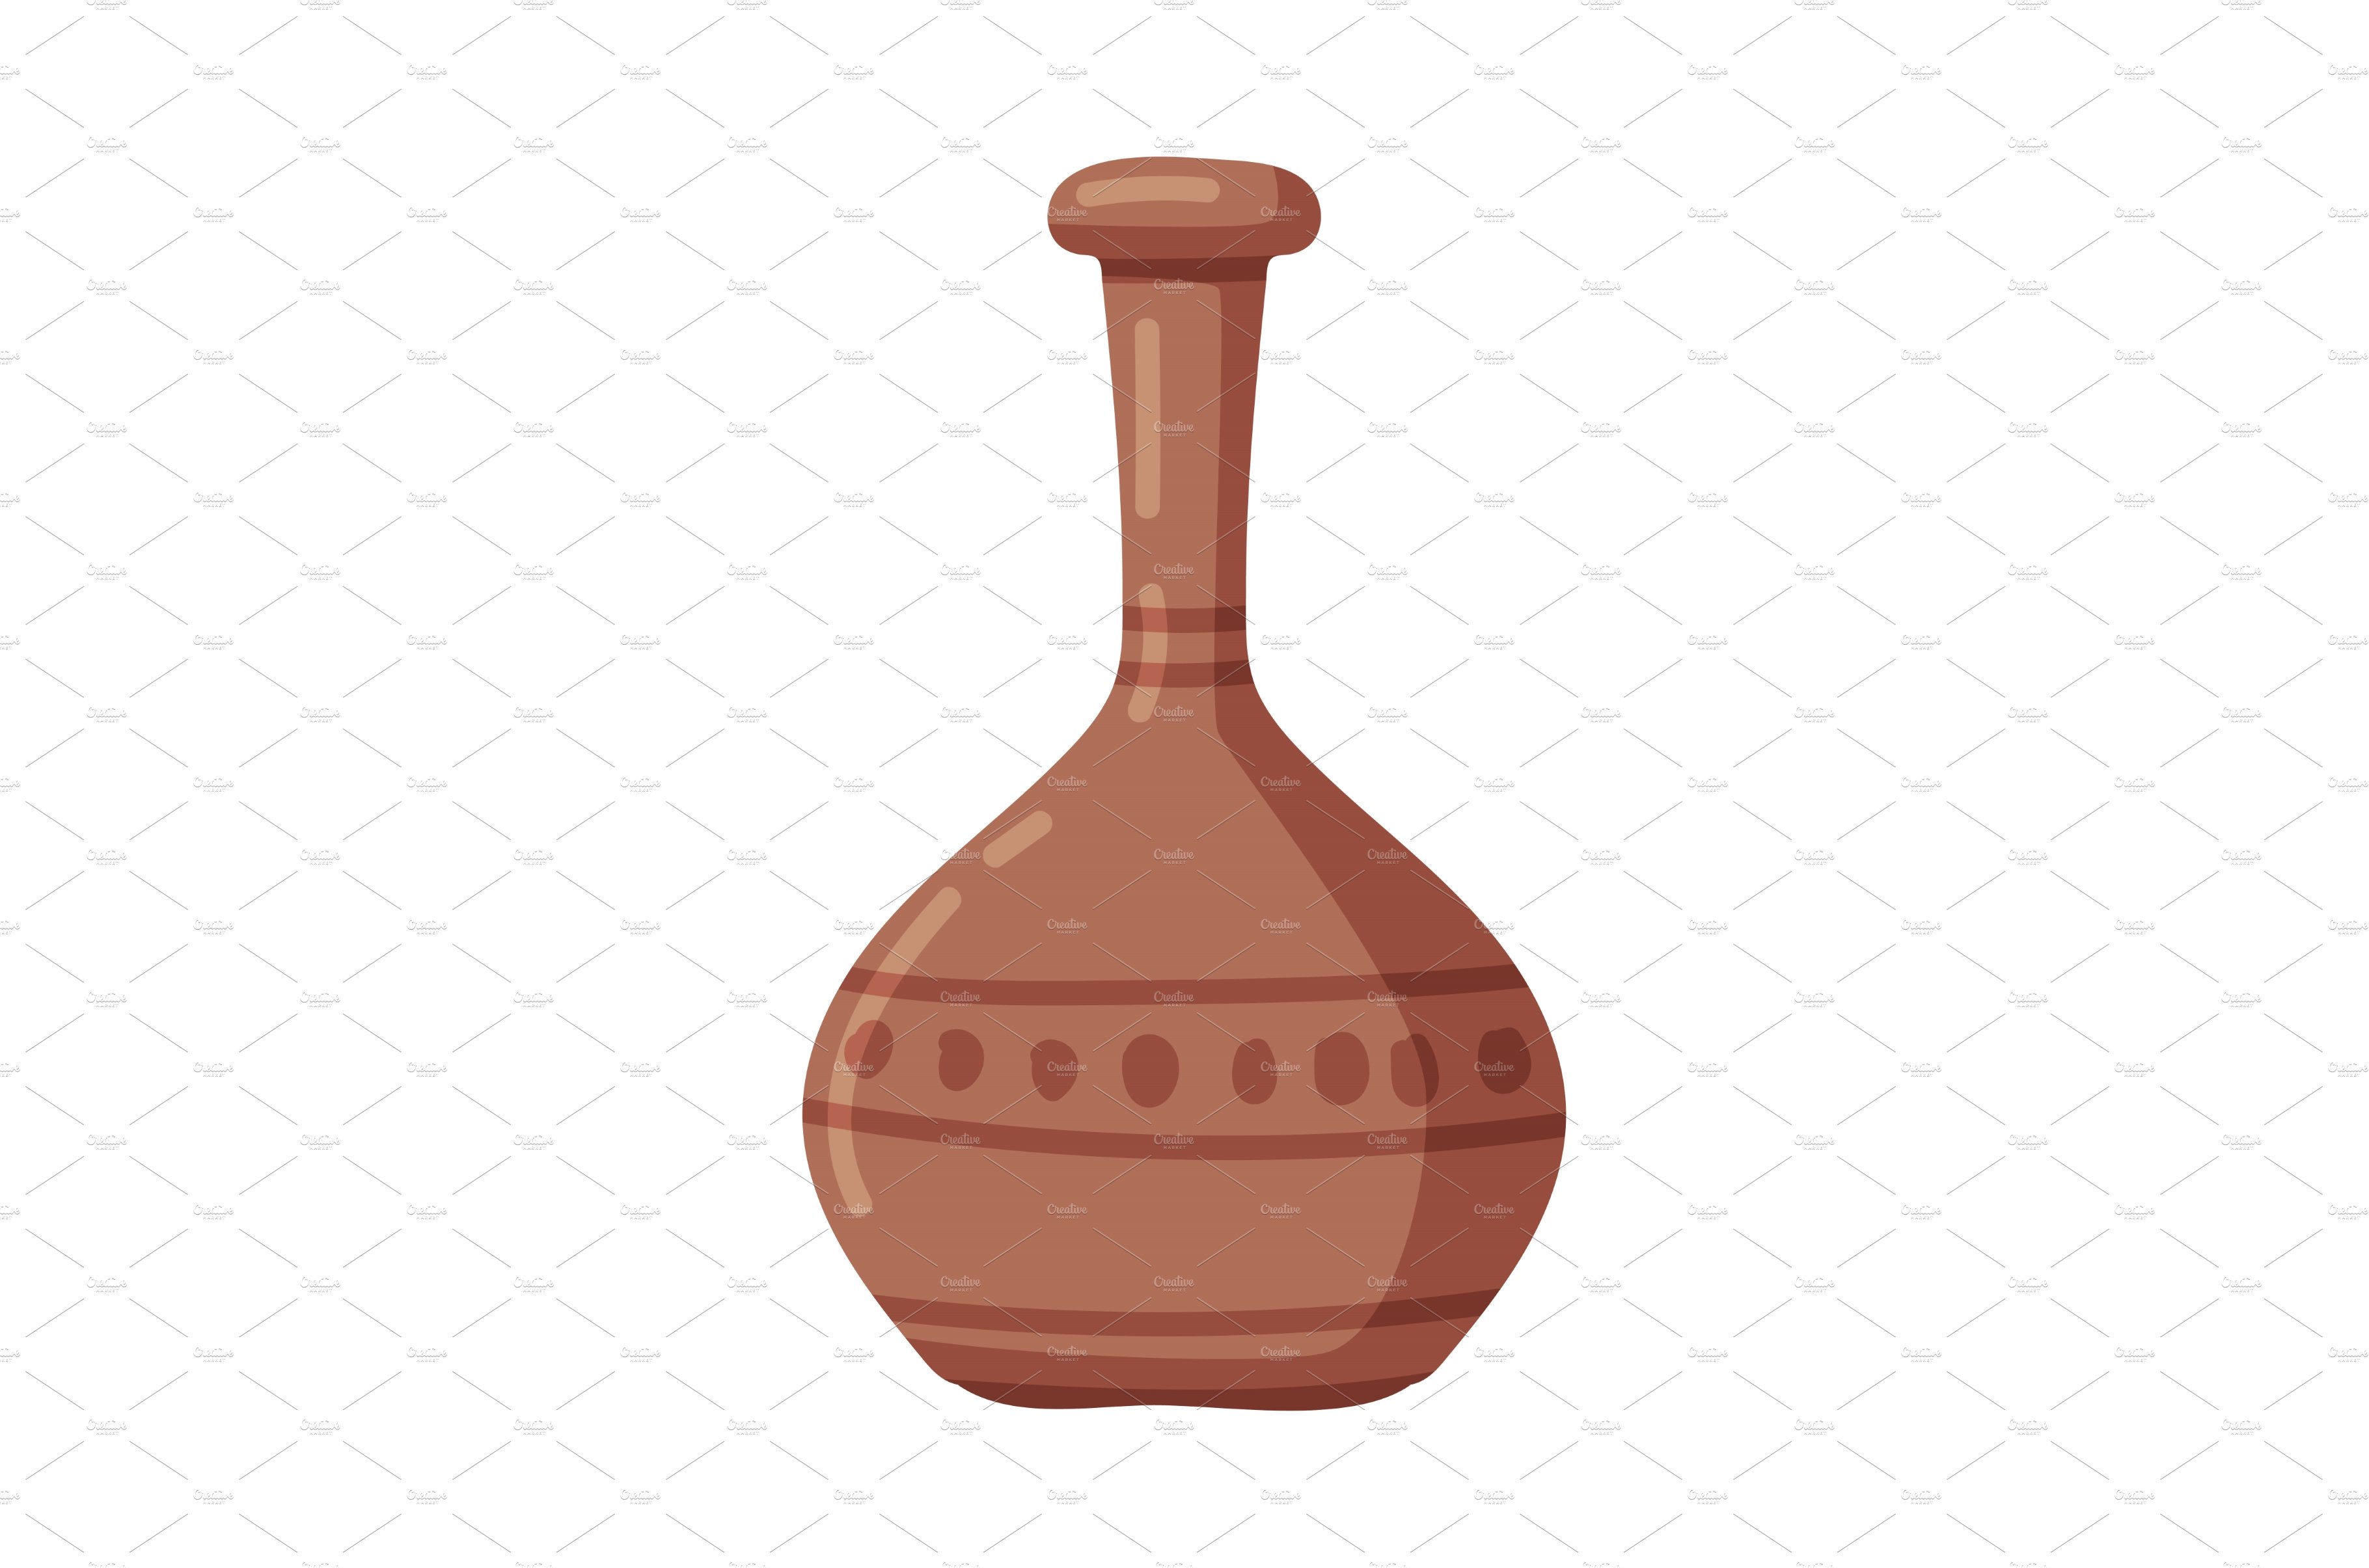 Ceramic Vase as Pot or Jar for Home cover image.